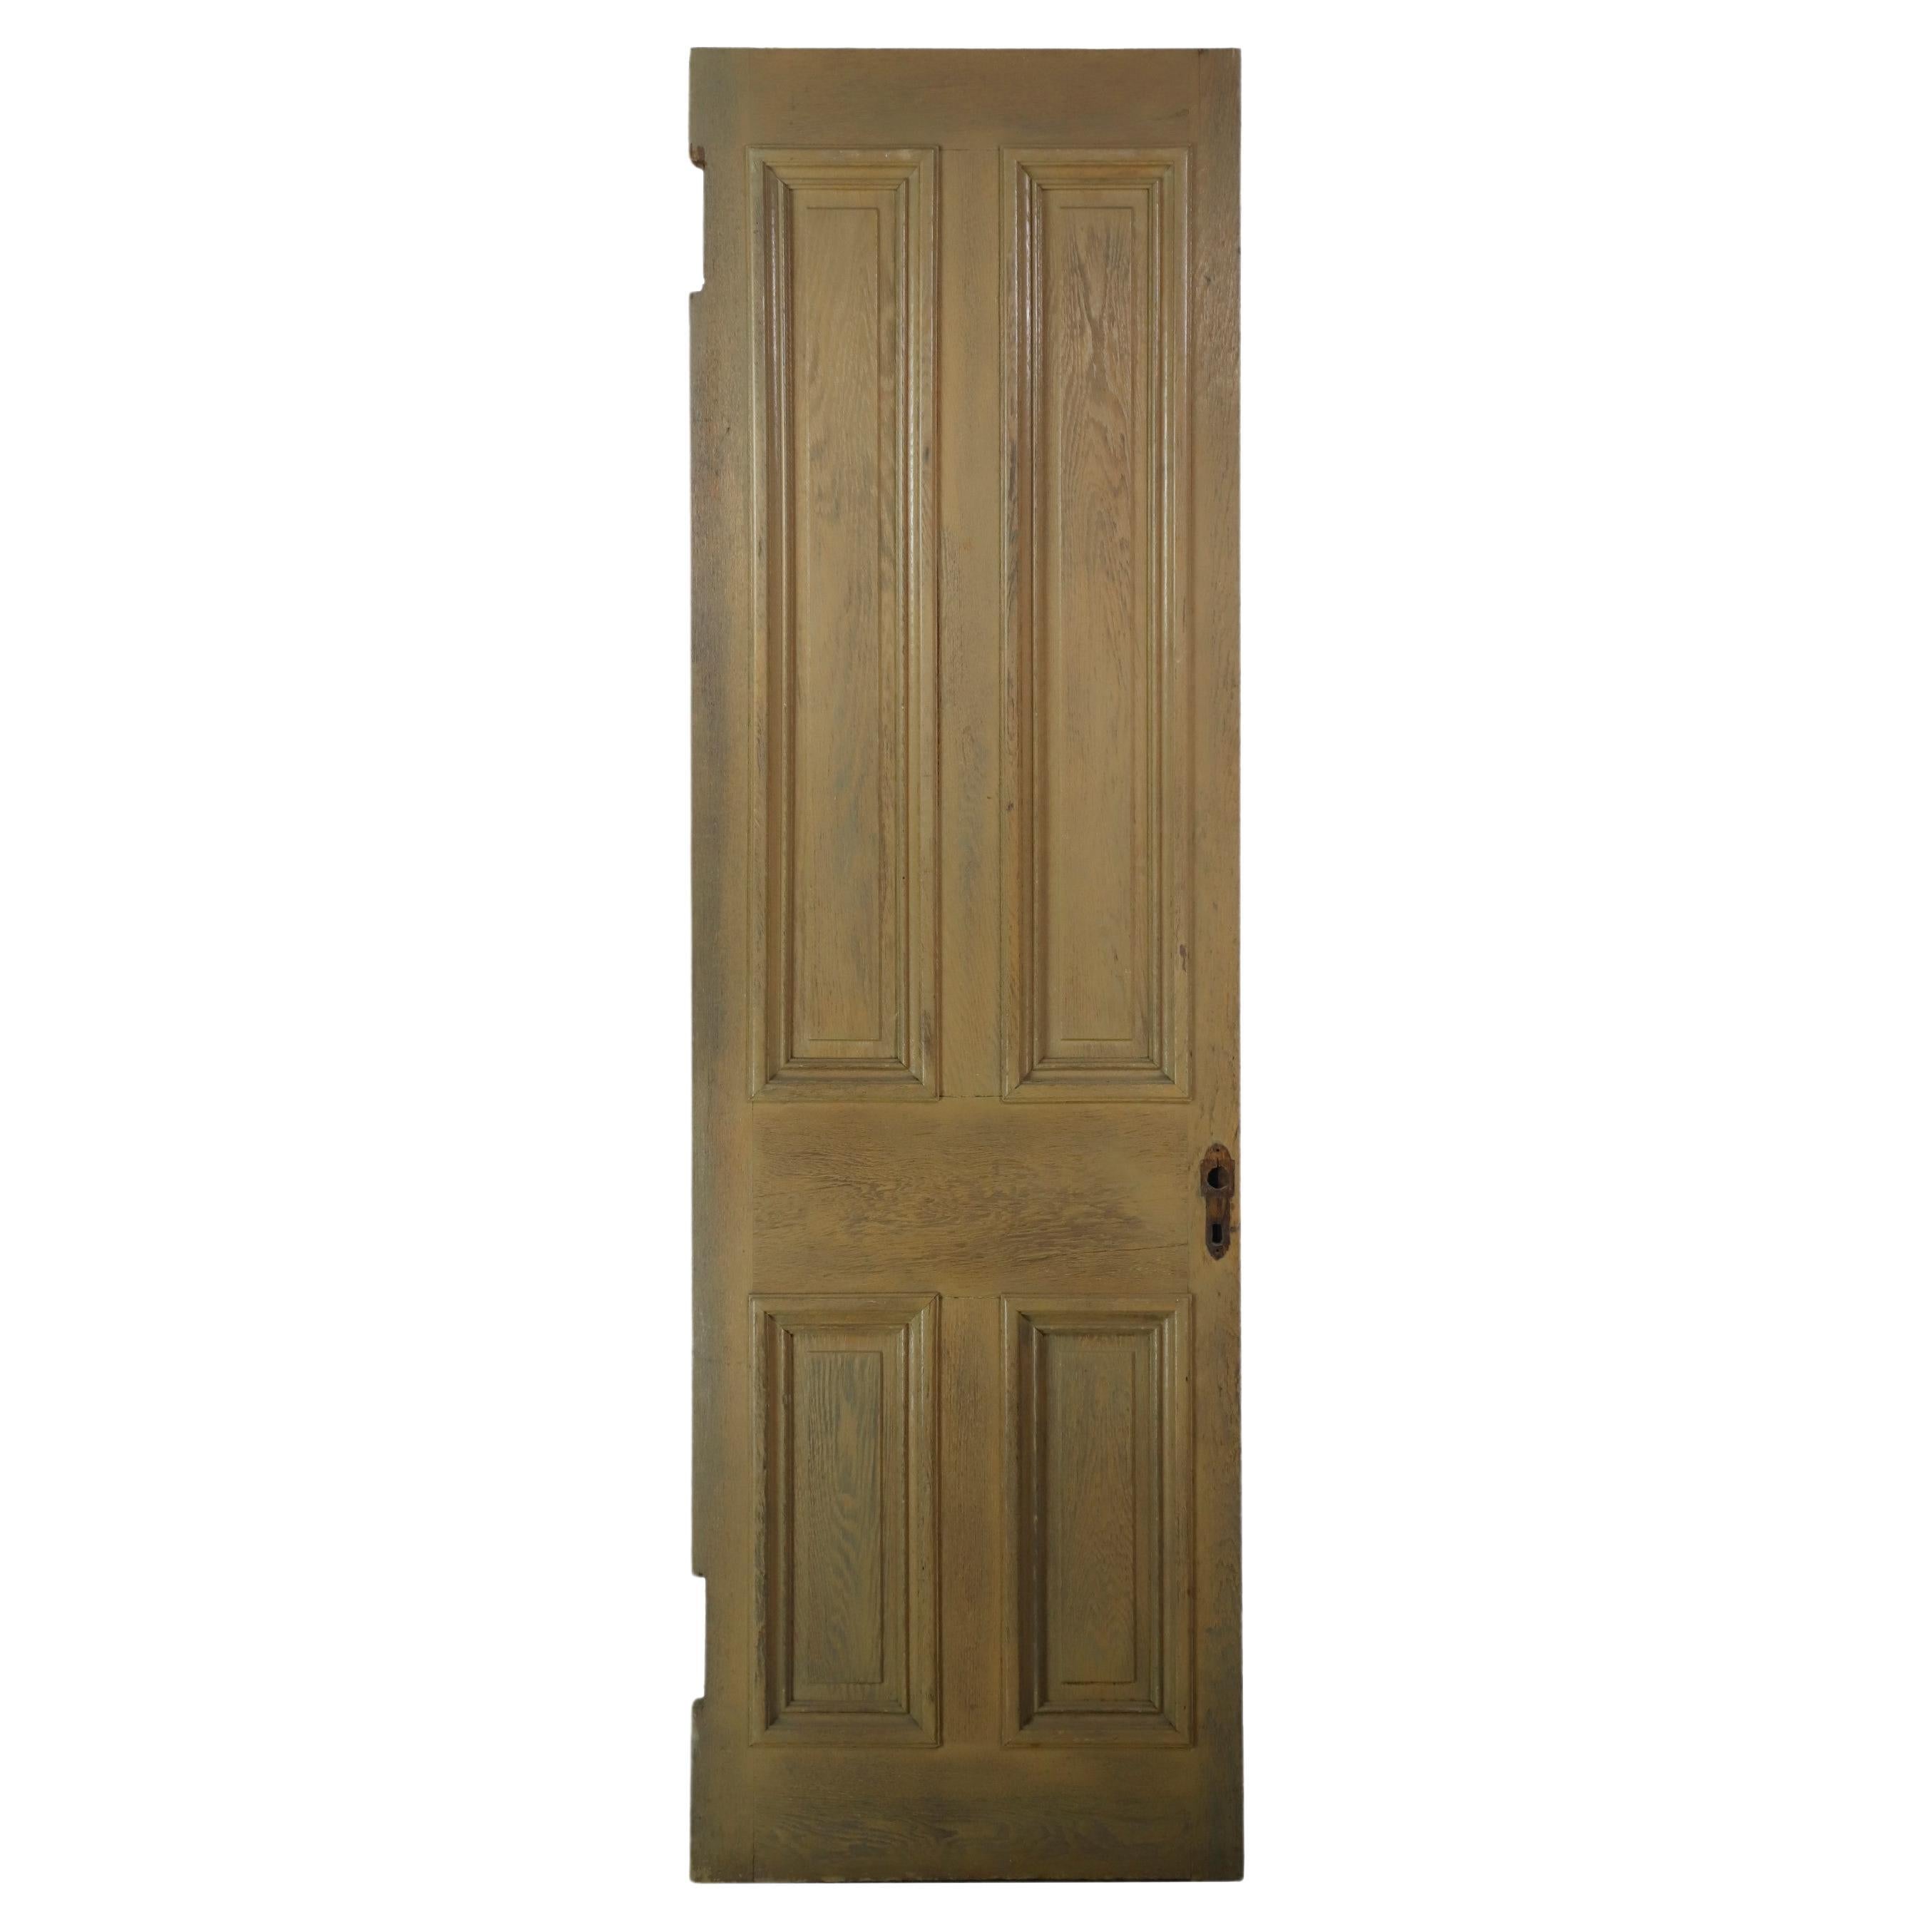 Antique 4 Pane Oak Passage Door 89.25 x 27 For Sale